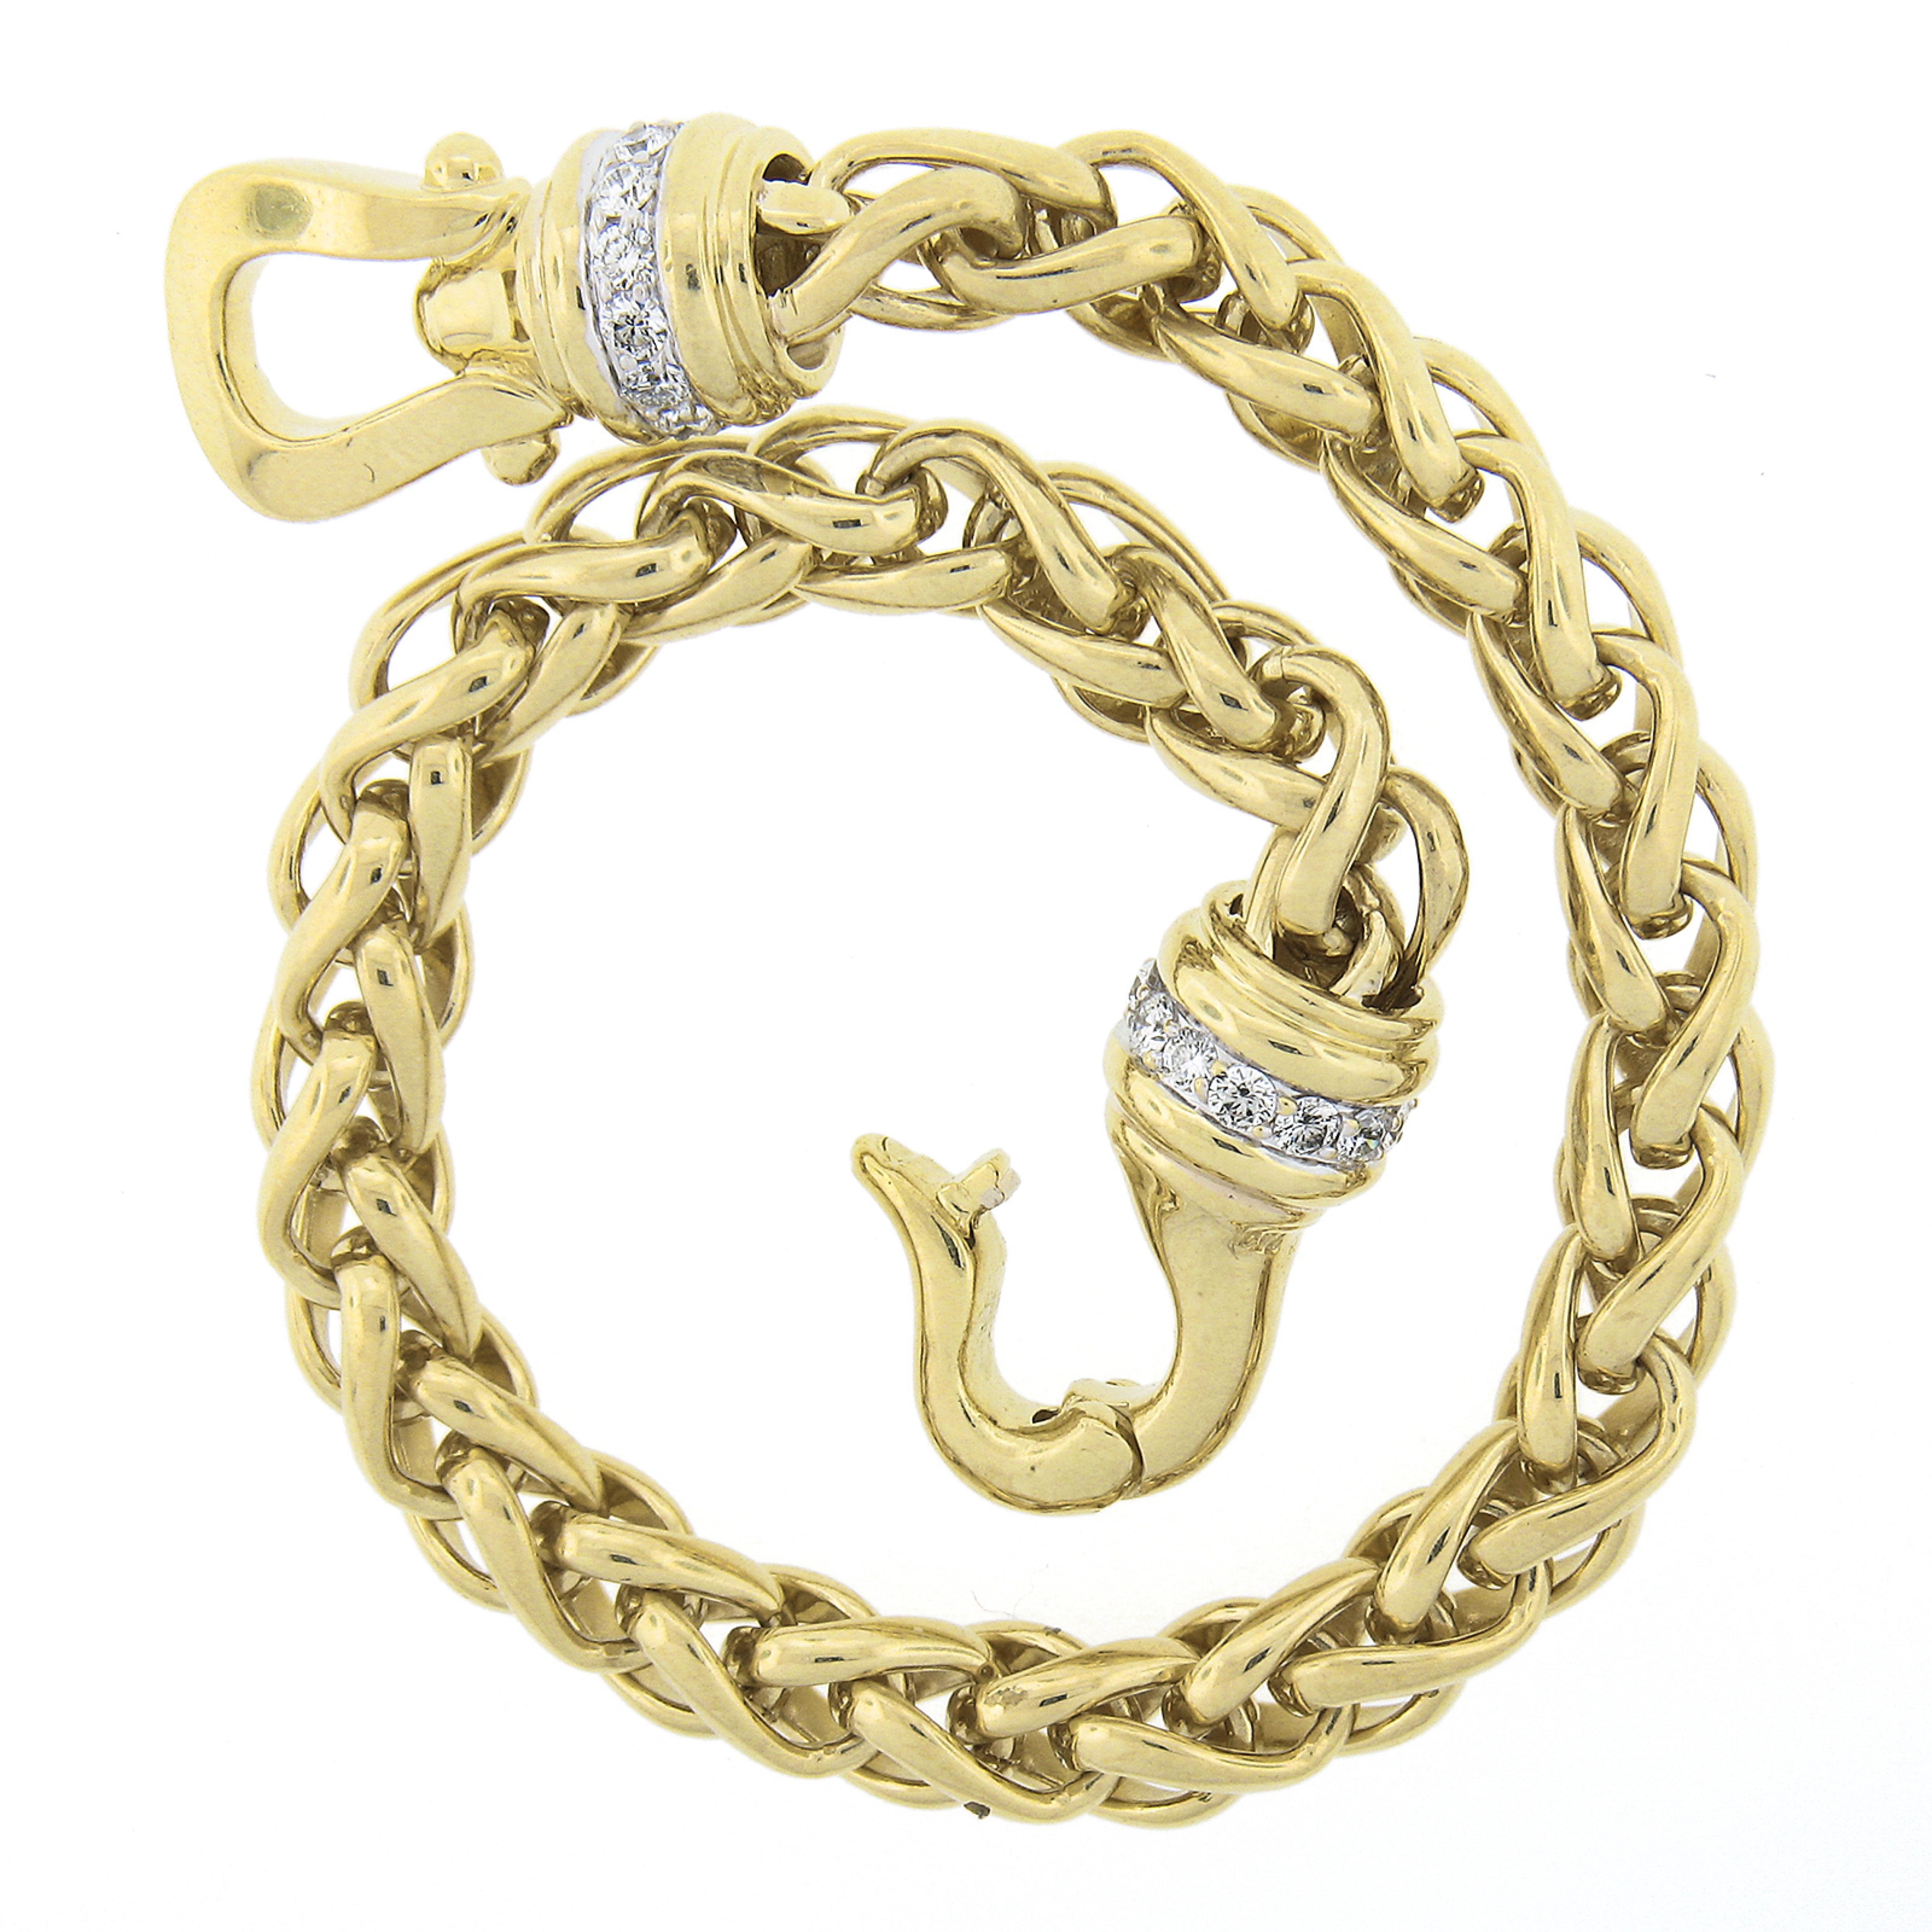 Women's or Men's David Yurman 18k Gold Polished Wheat Link Bracelet W/ 0.78ctw Ideal Pave Diamond